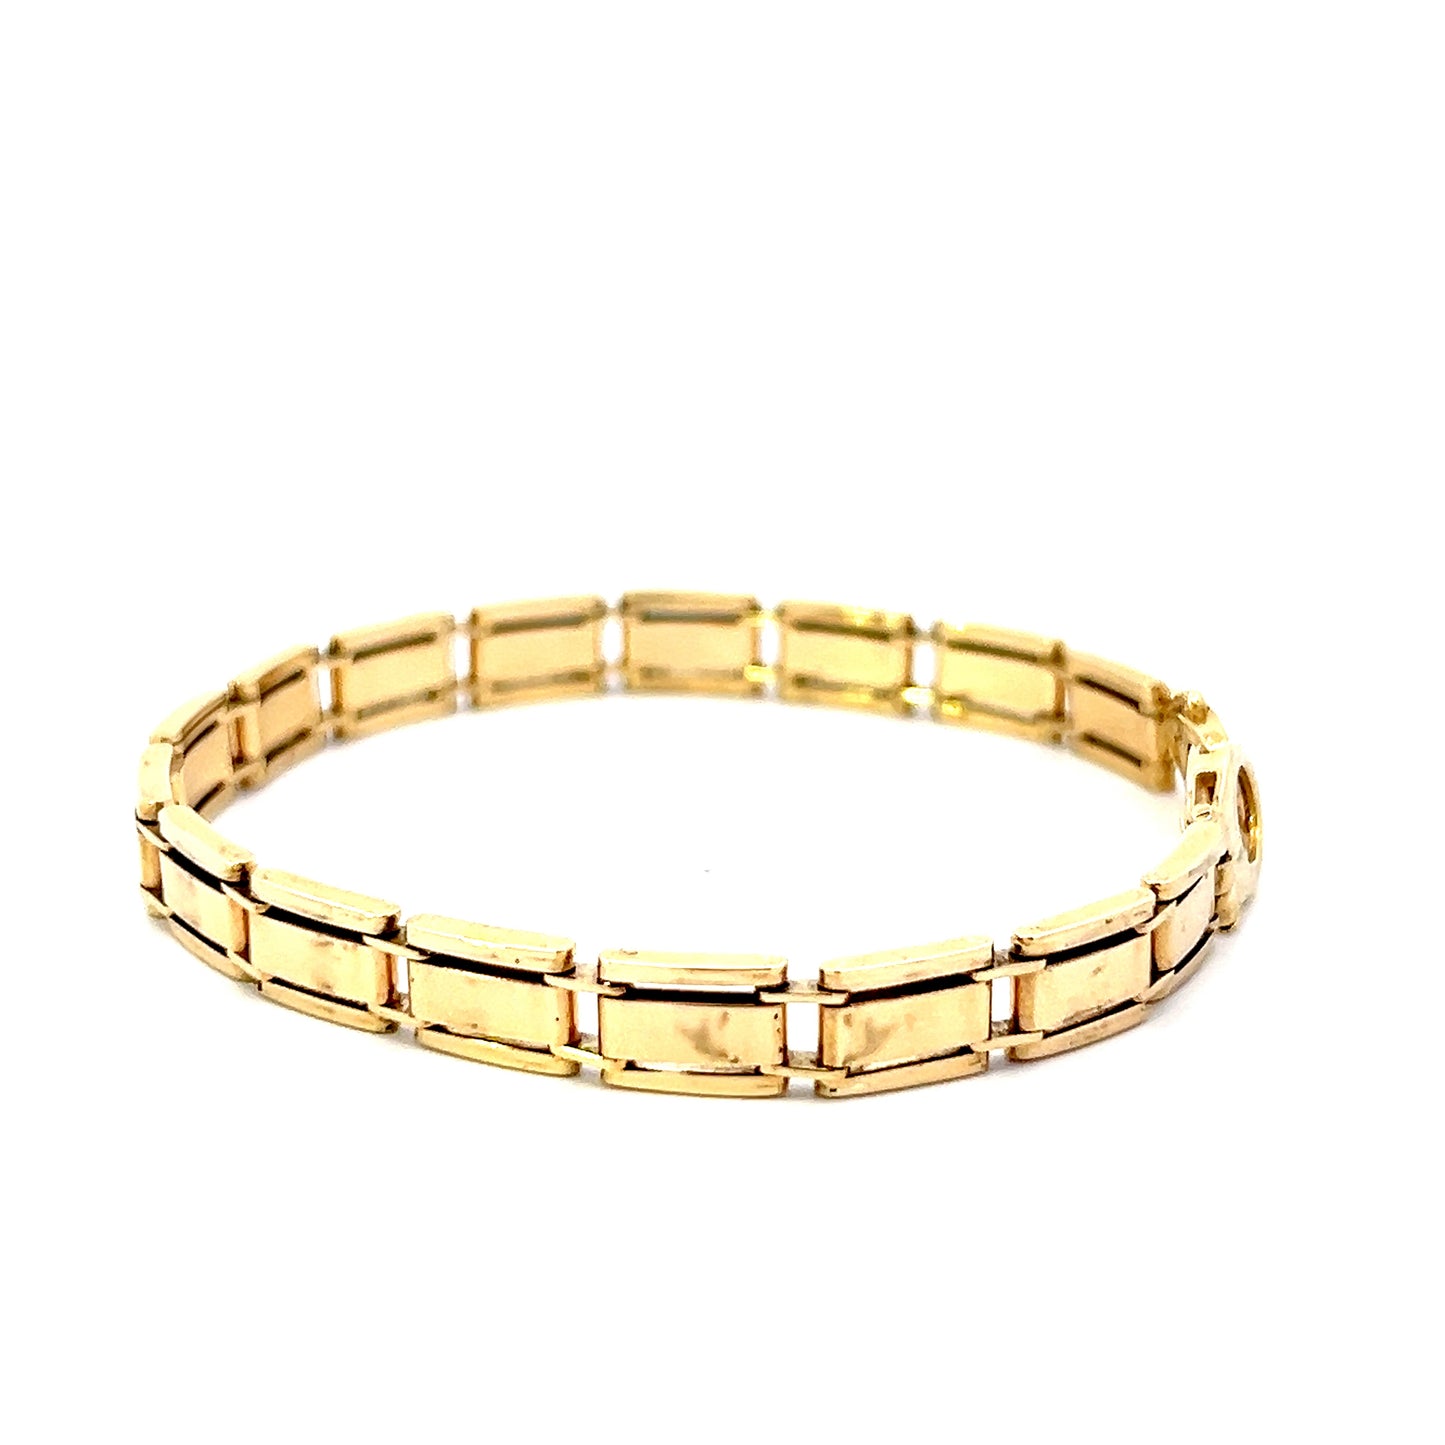 7" Solid Fashion Link Bracelet - 14k - Yellow Gold - 13.9g